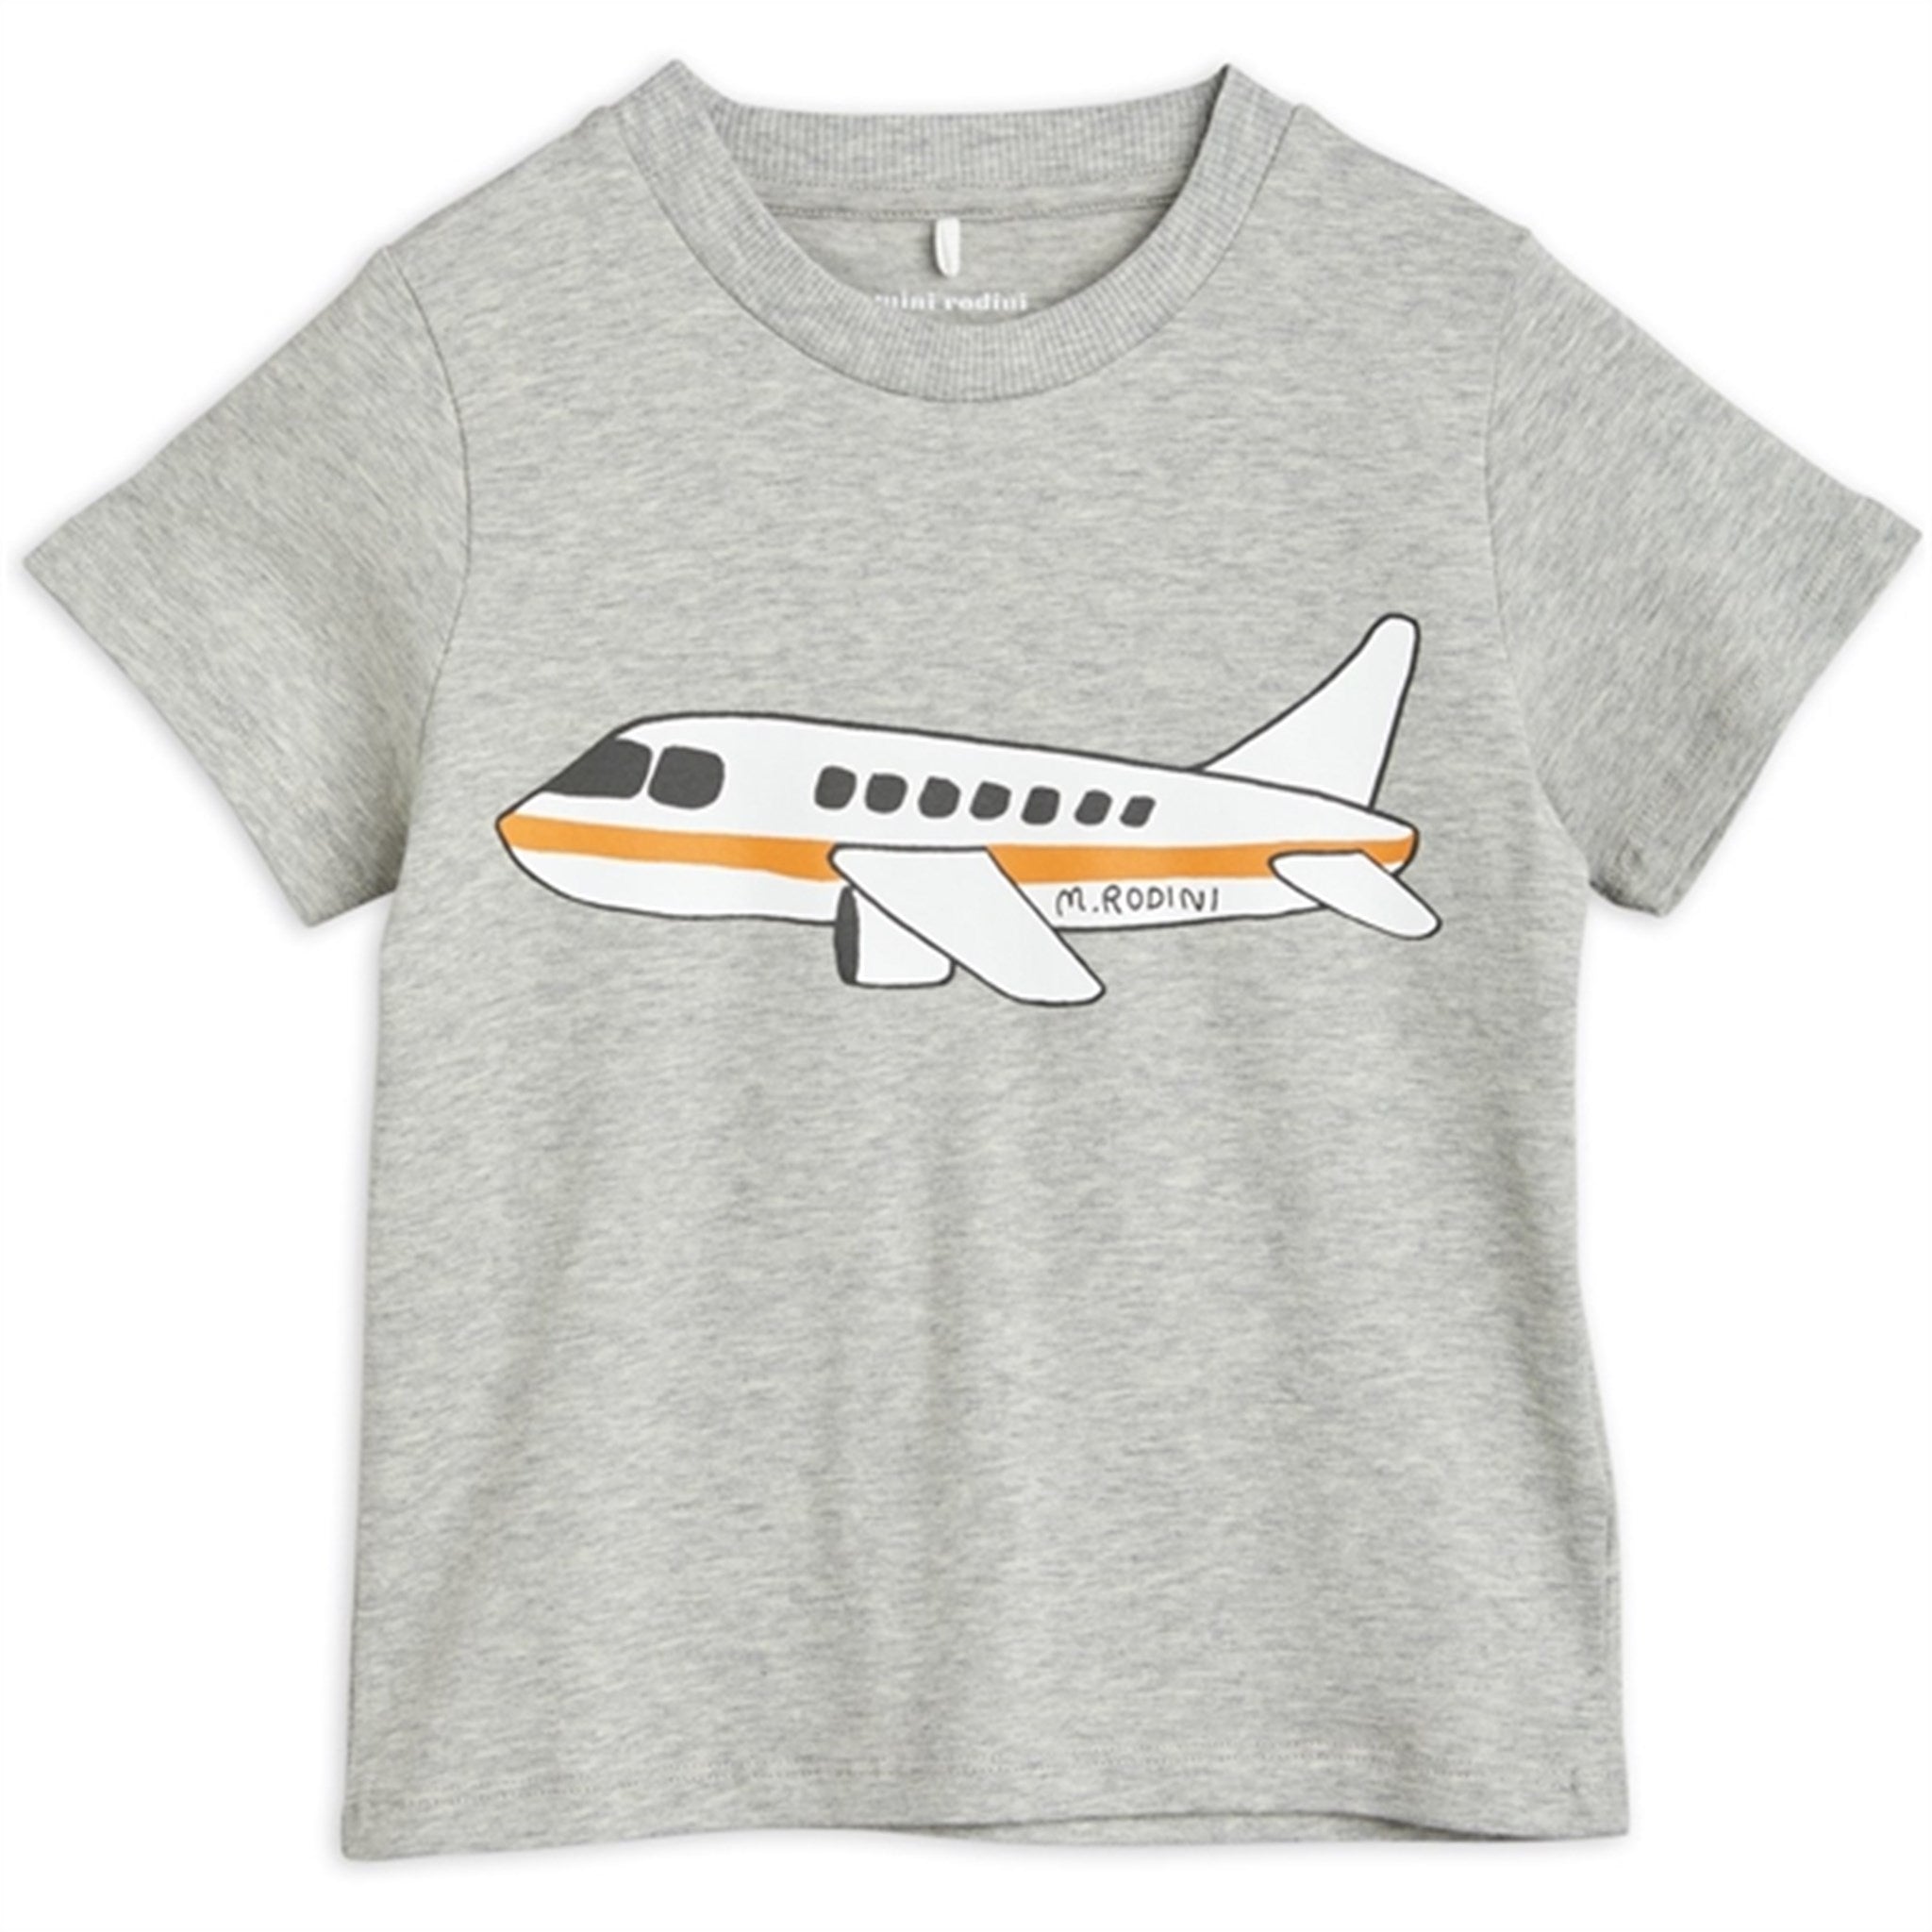 Mini Rodini Airplane Sp T-shirt Grey melange